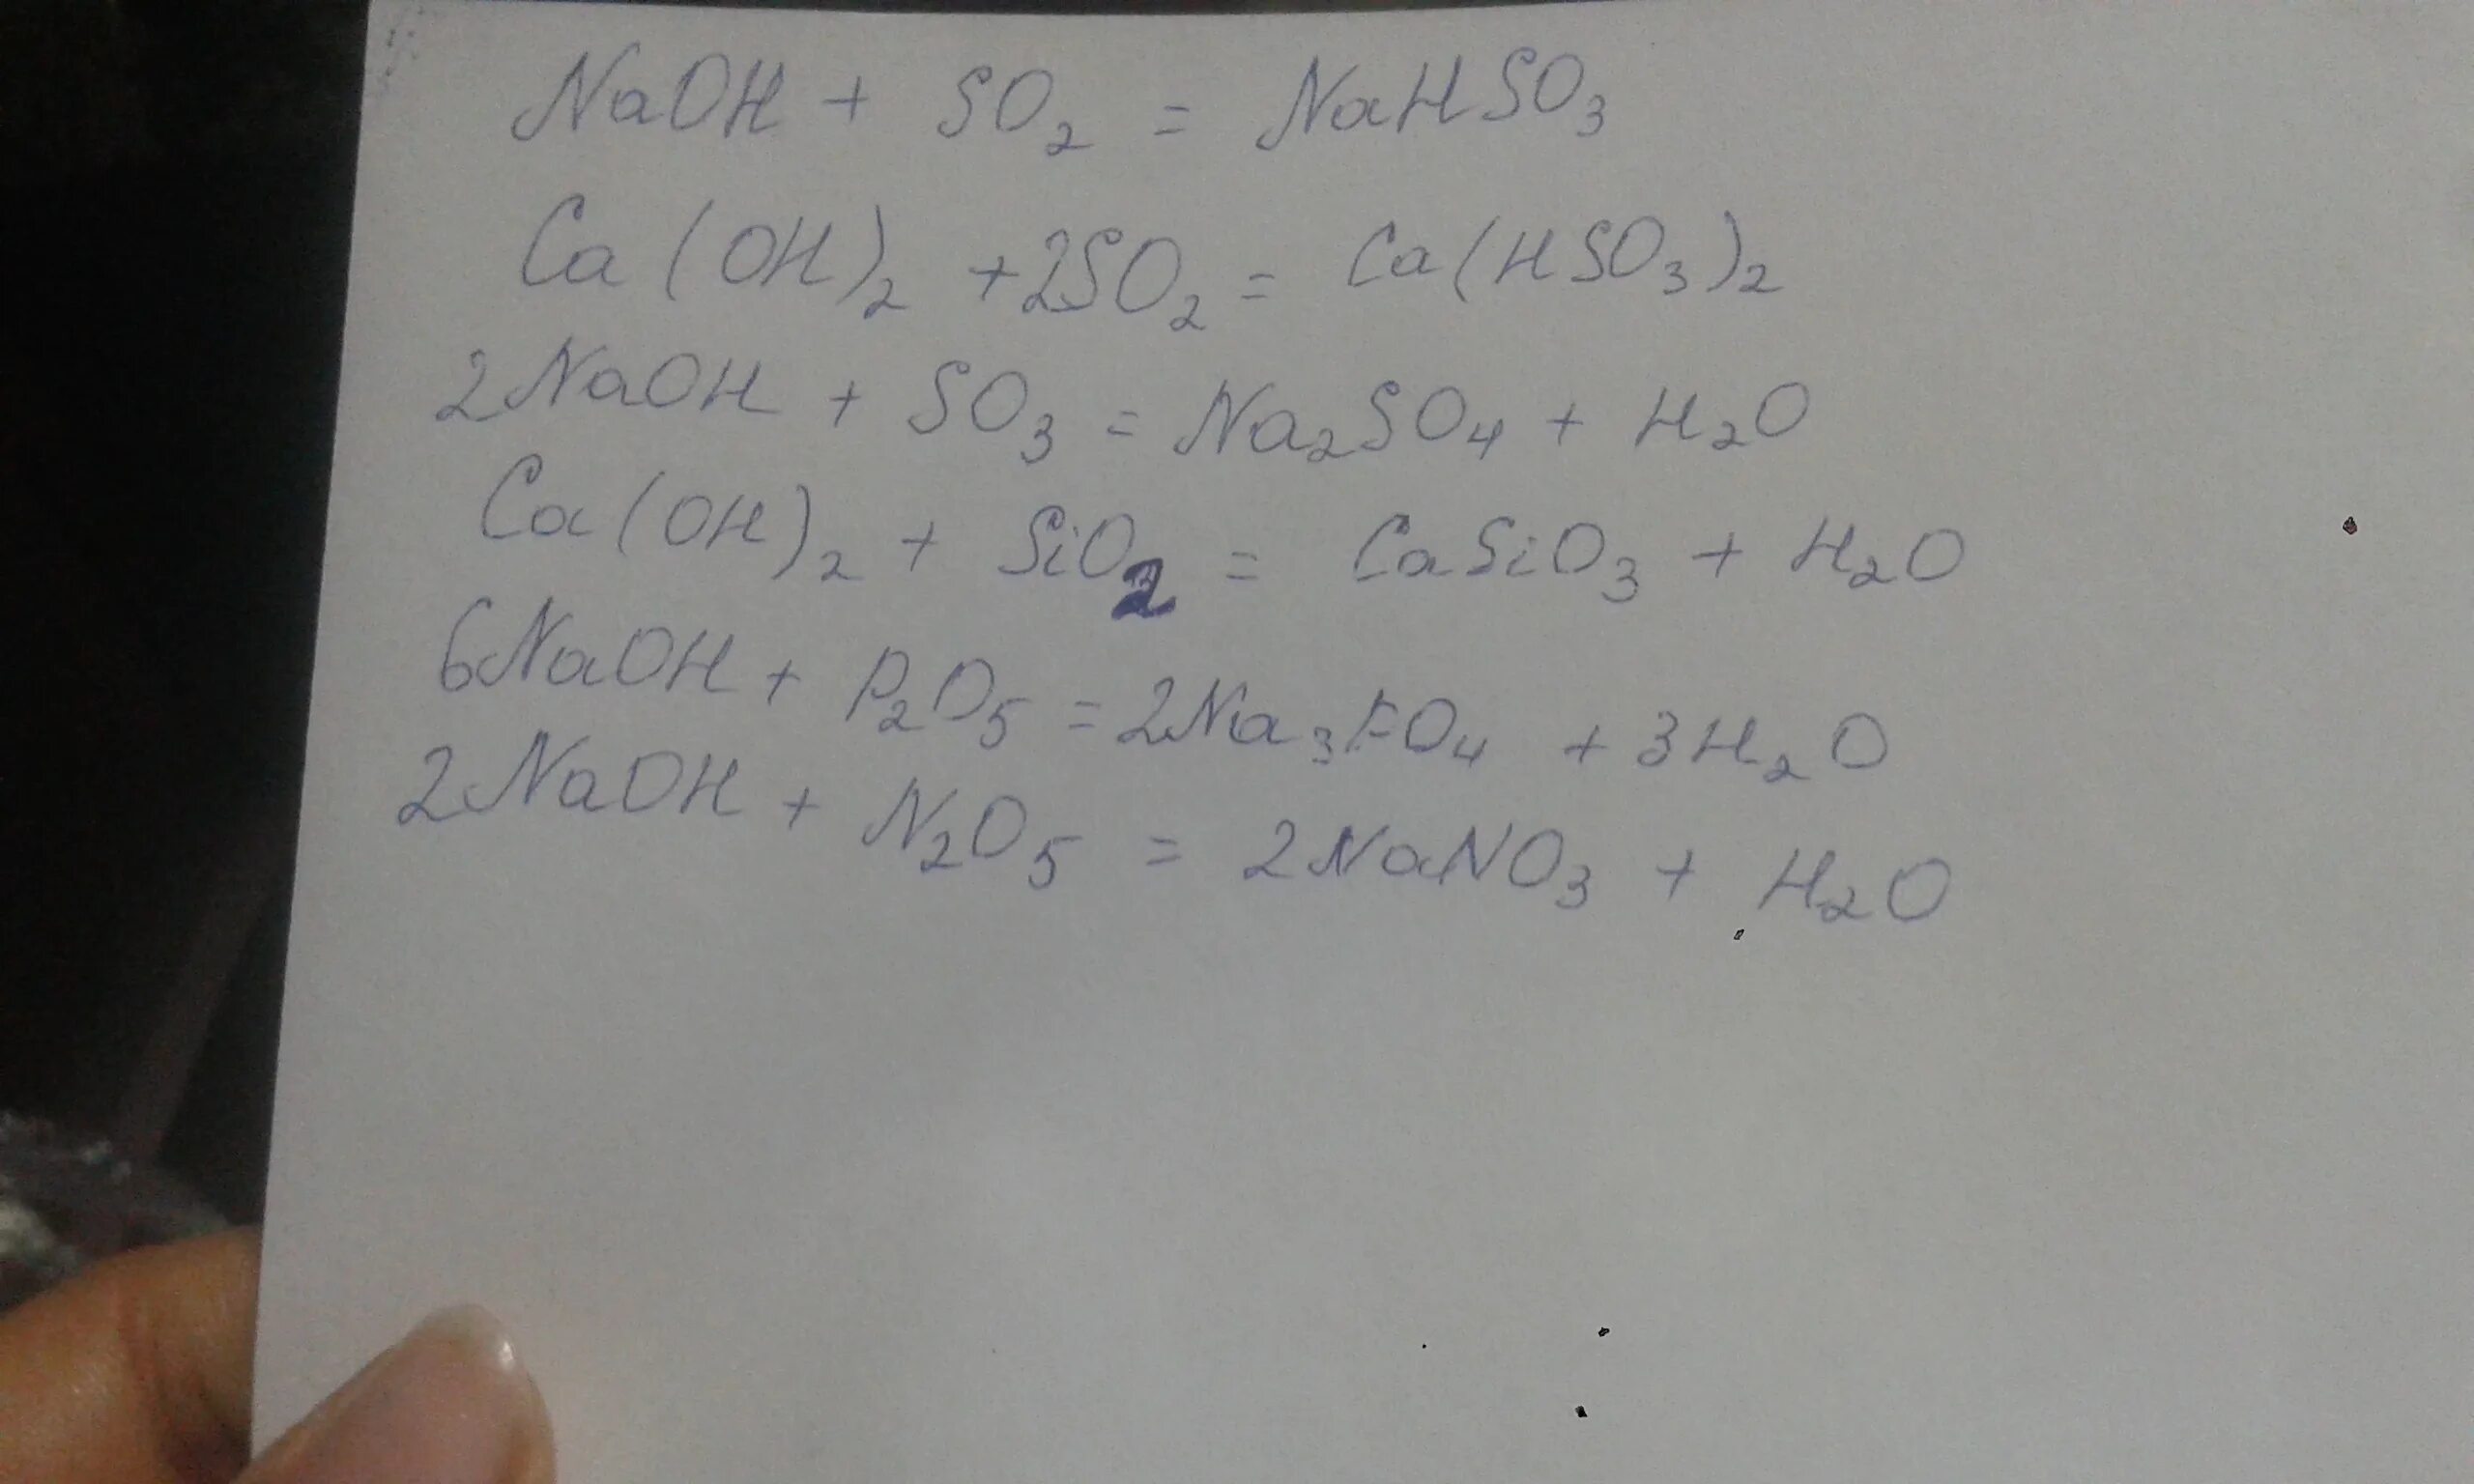 Кон sio2. P2o5 CA Oh 2 раствор. CA Oh 2 sio2 уравнение. N2o5 уравнение. CA Oh 2 so2 уравнение.